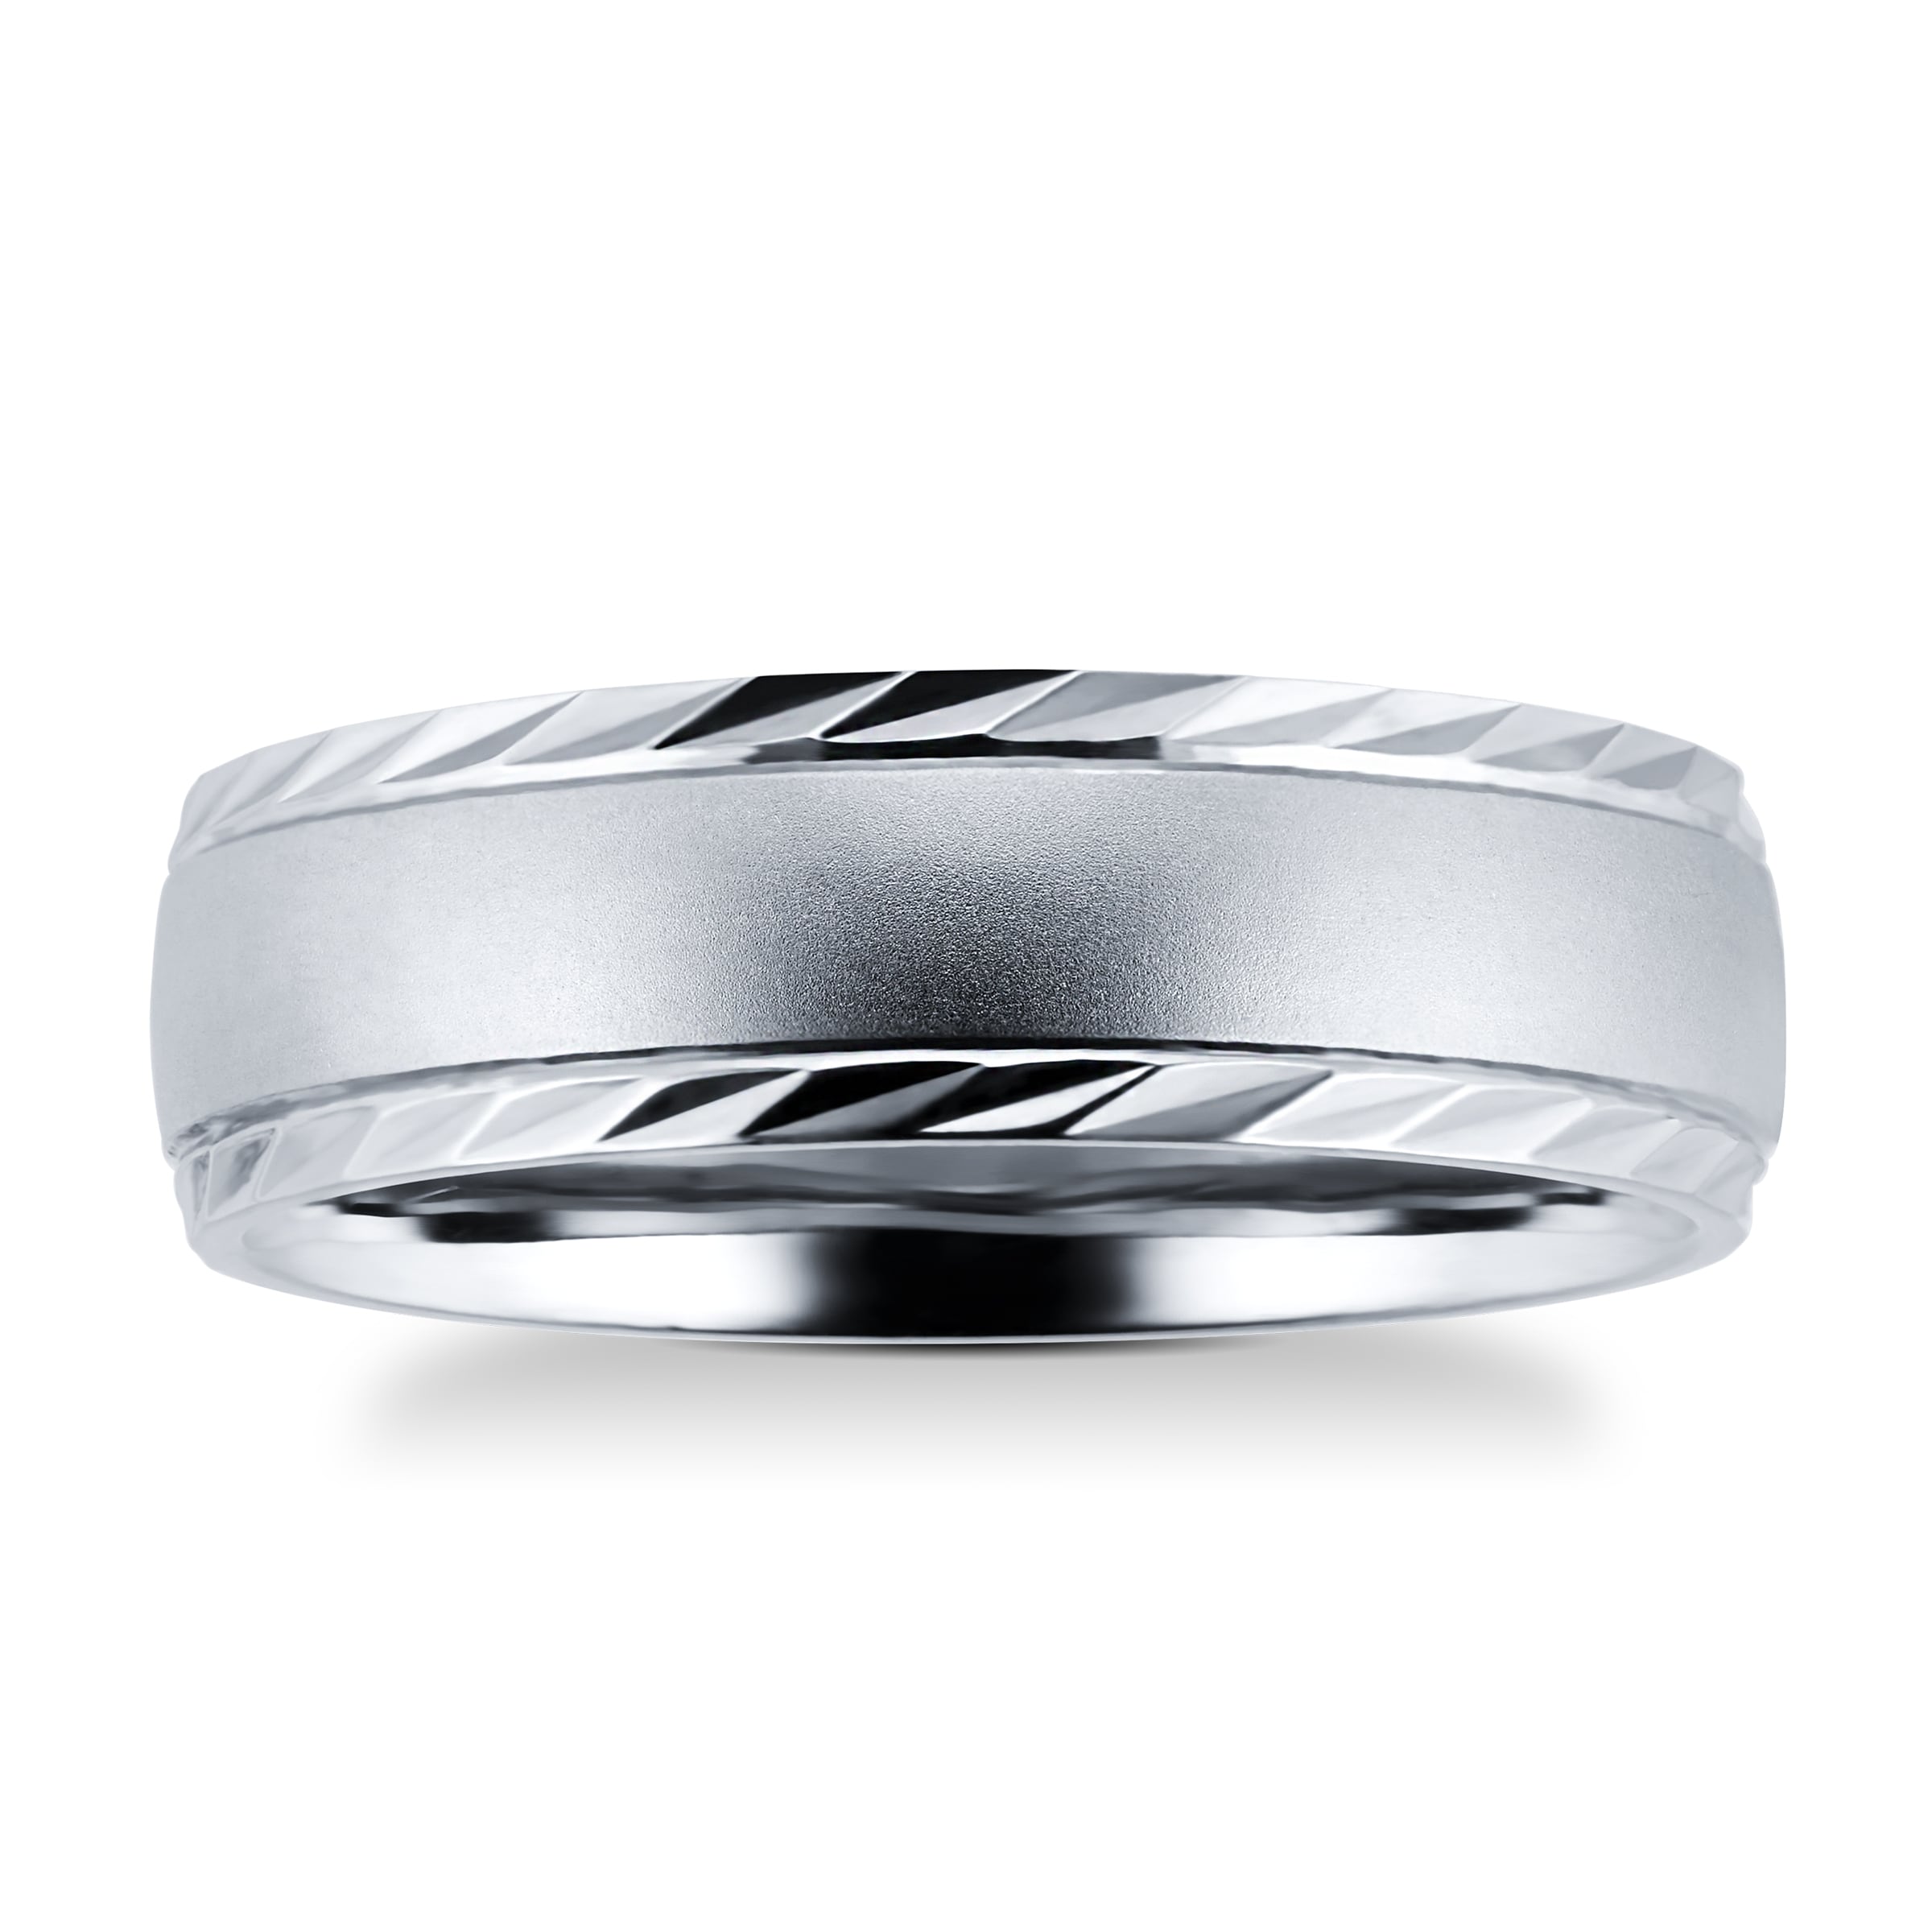 Palladium 500 6mm Fancy Gents Ring - Ring Size Q